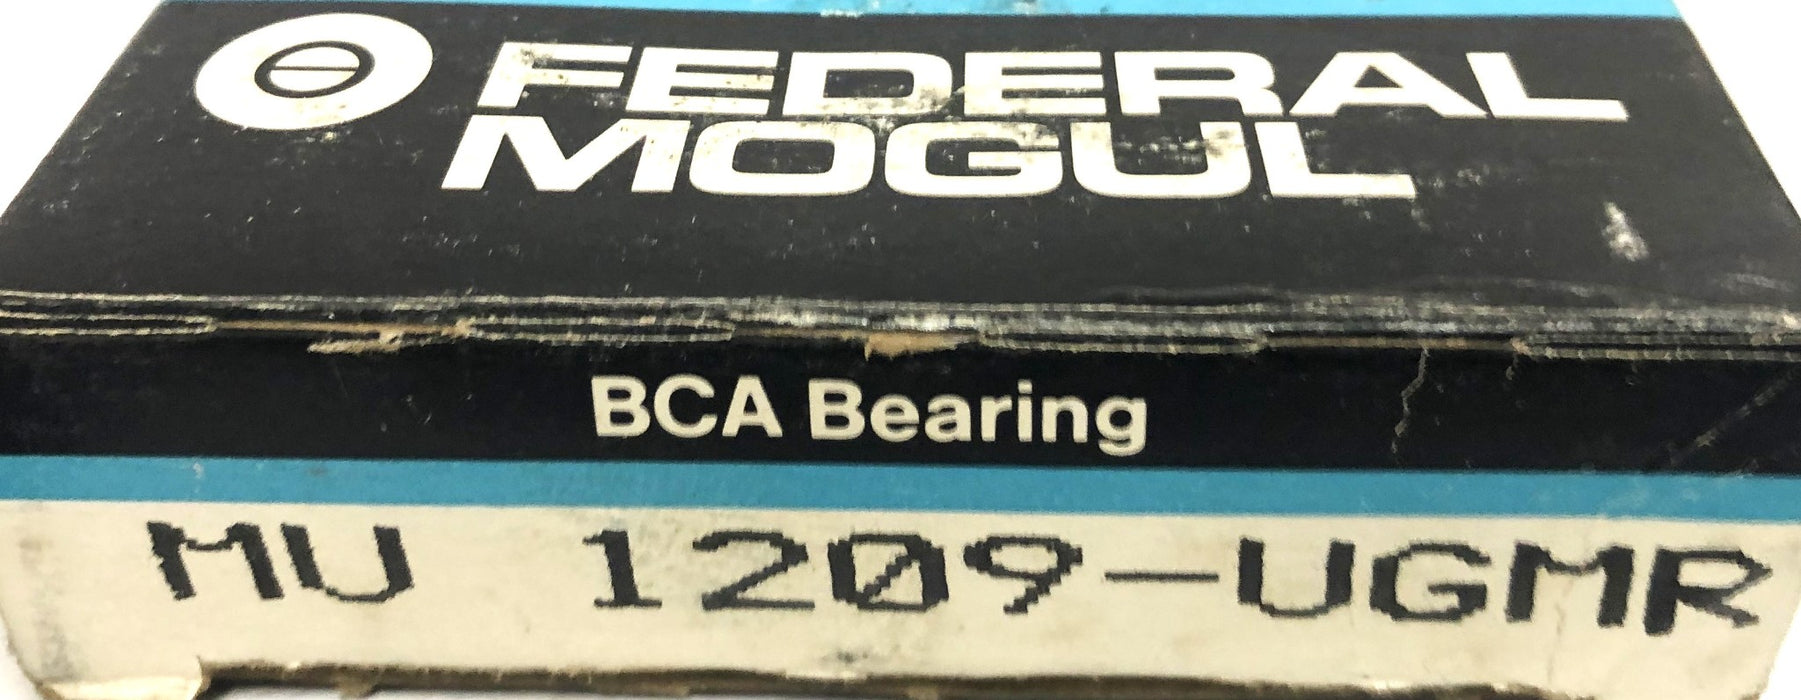 Link-Belt Cylindrical Roller Bearing With Snap Ring MU1209UGMR NOS